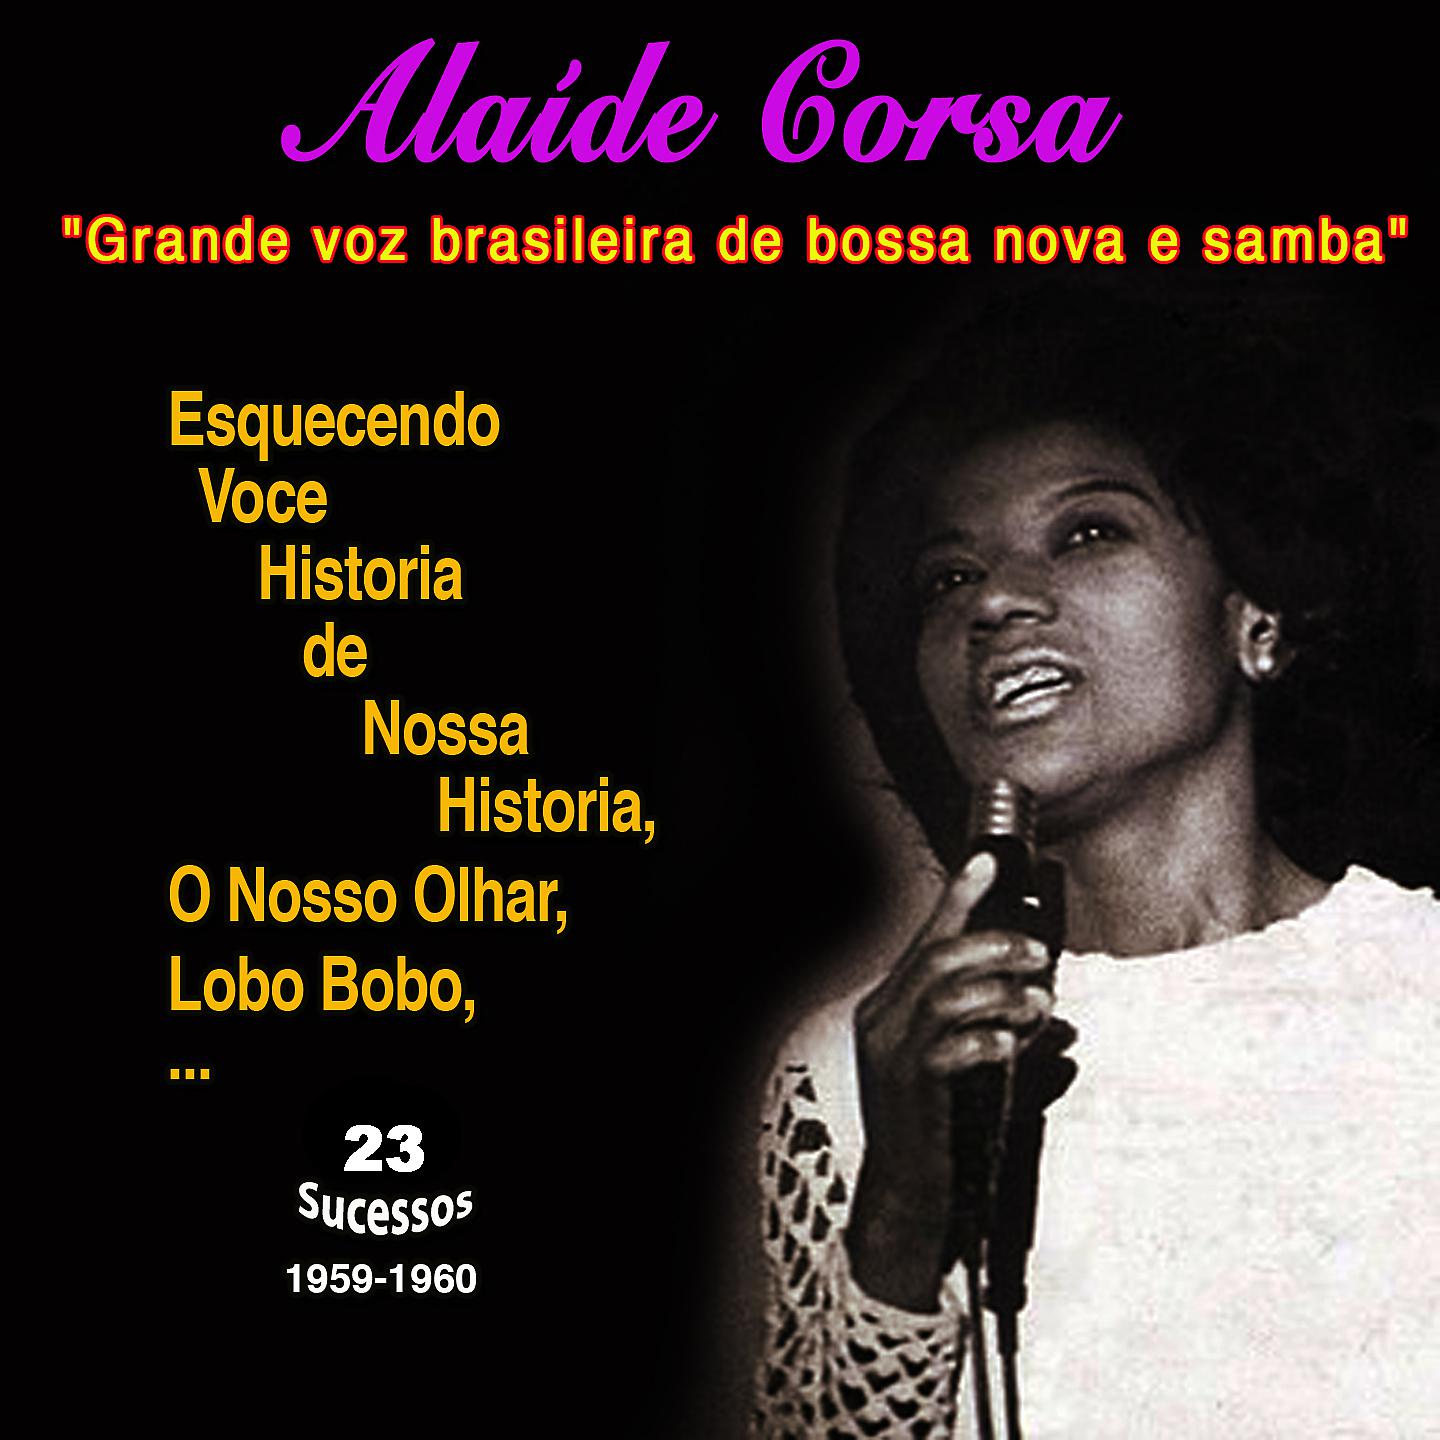 Постер альбома "Grande voz brasileira de bossa nova e sambaz" Alaide Costa